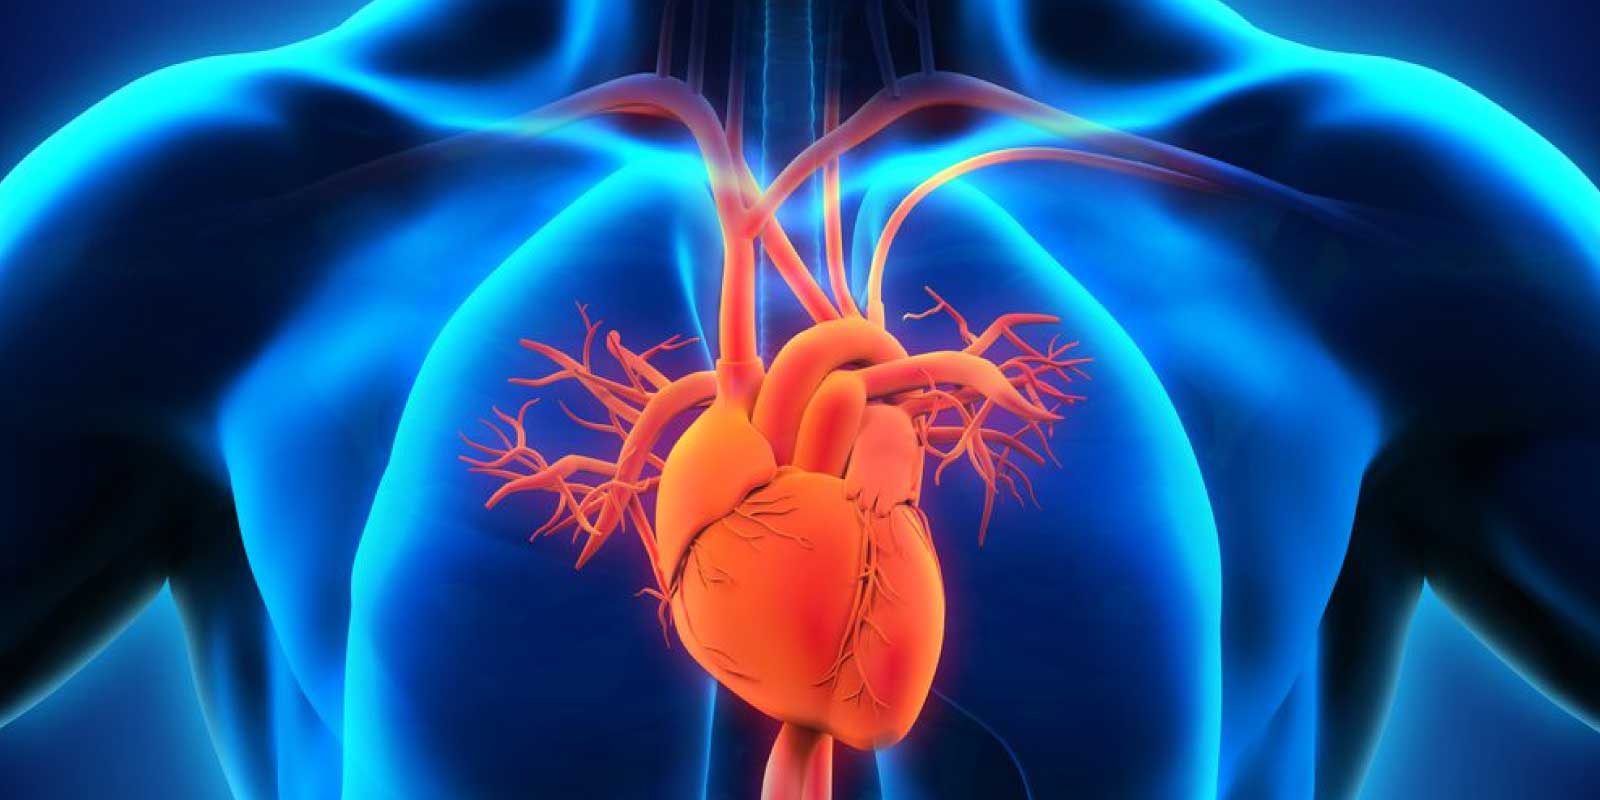 Transcatheter Aortic Valve Implantation (TAVI); new technology for Heart Valve replacement